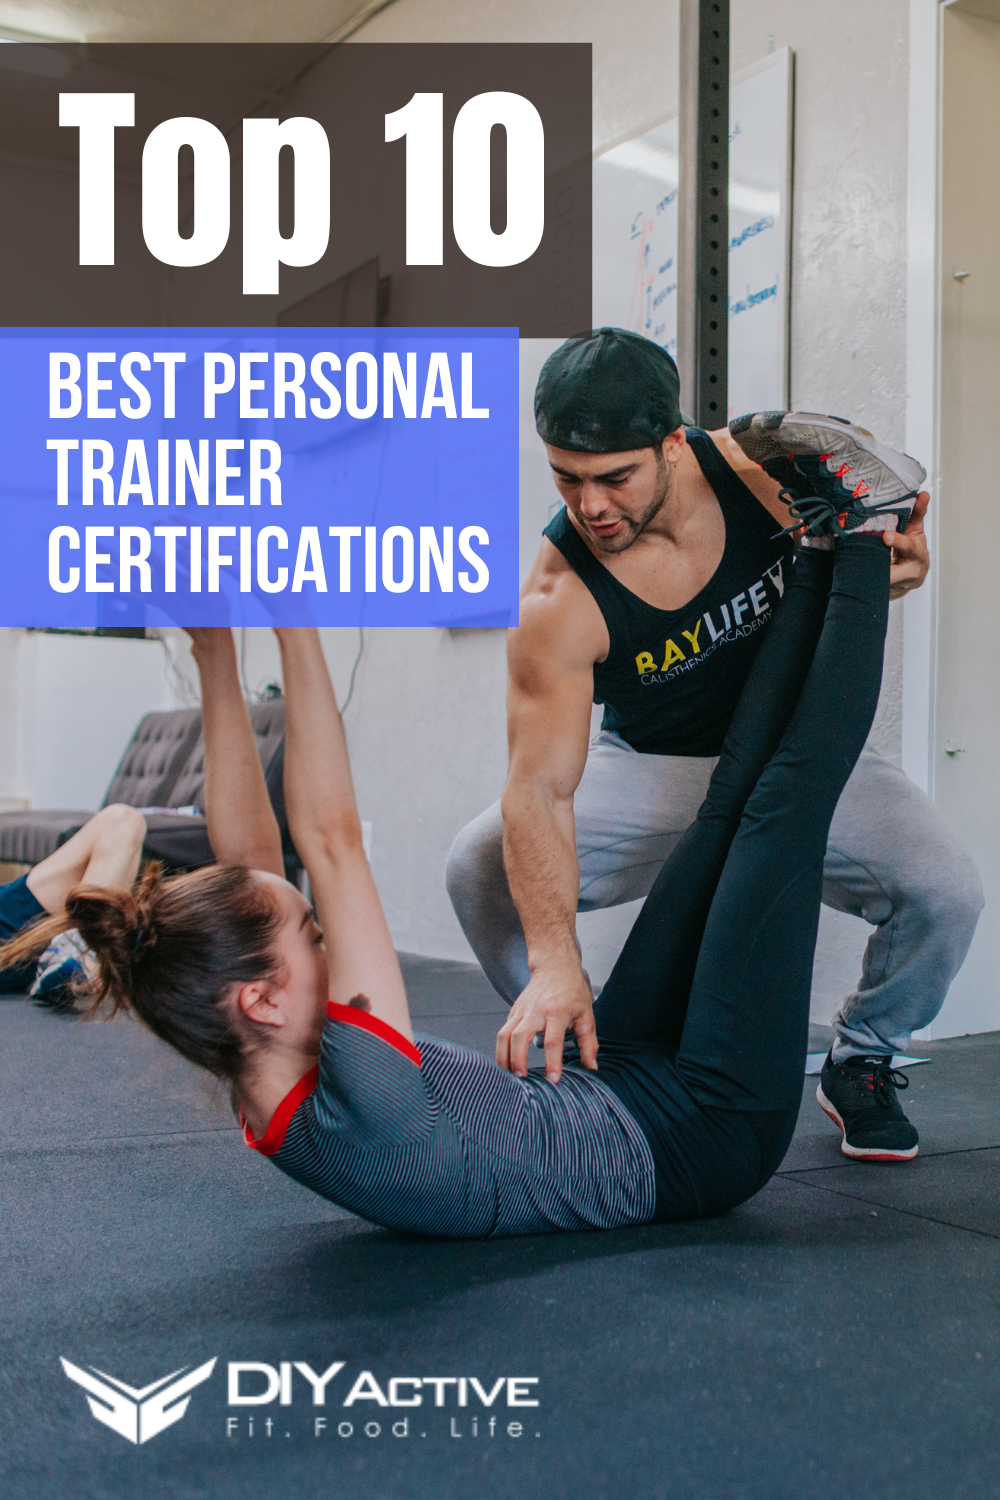 Top 10 Best Personal Trainer Certifications